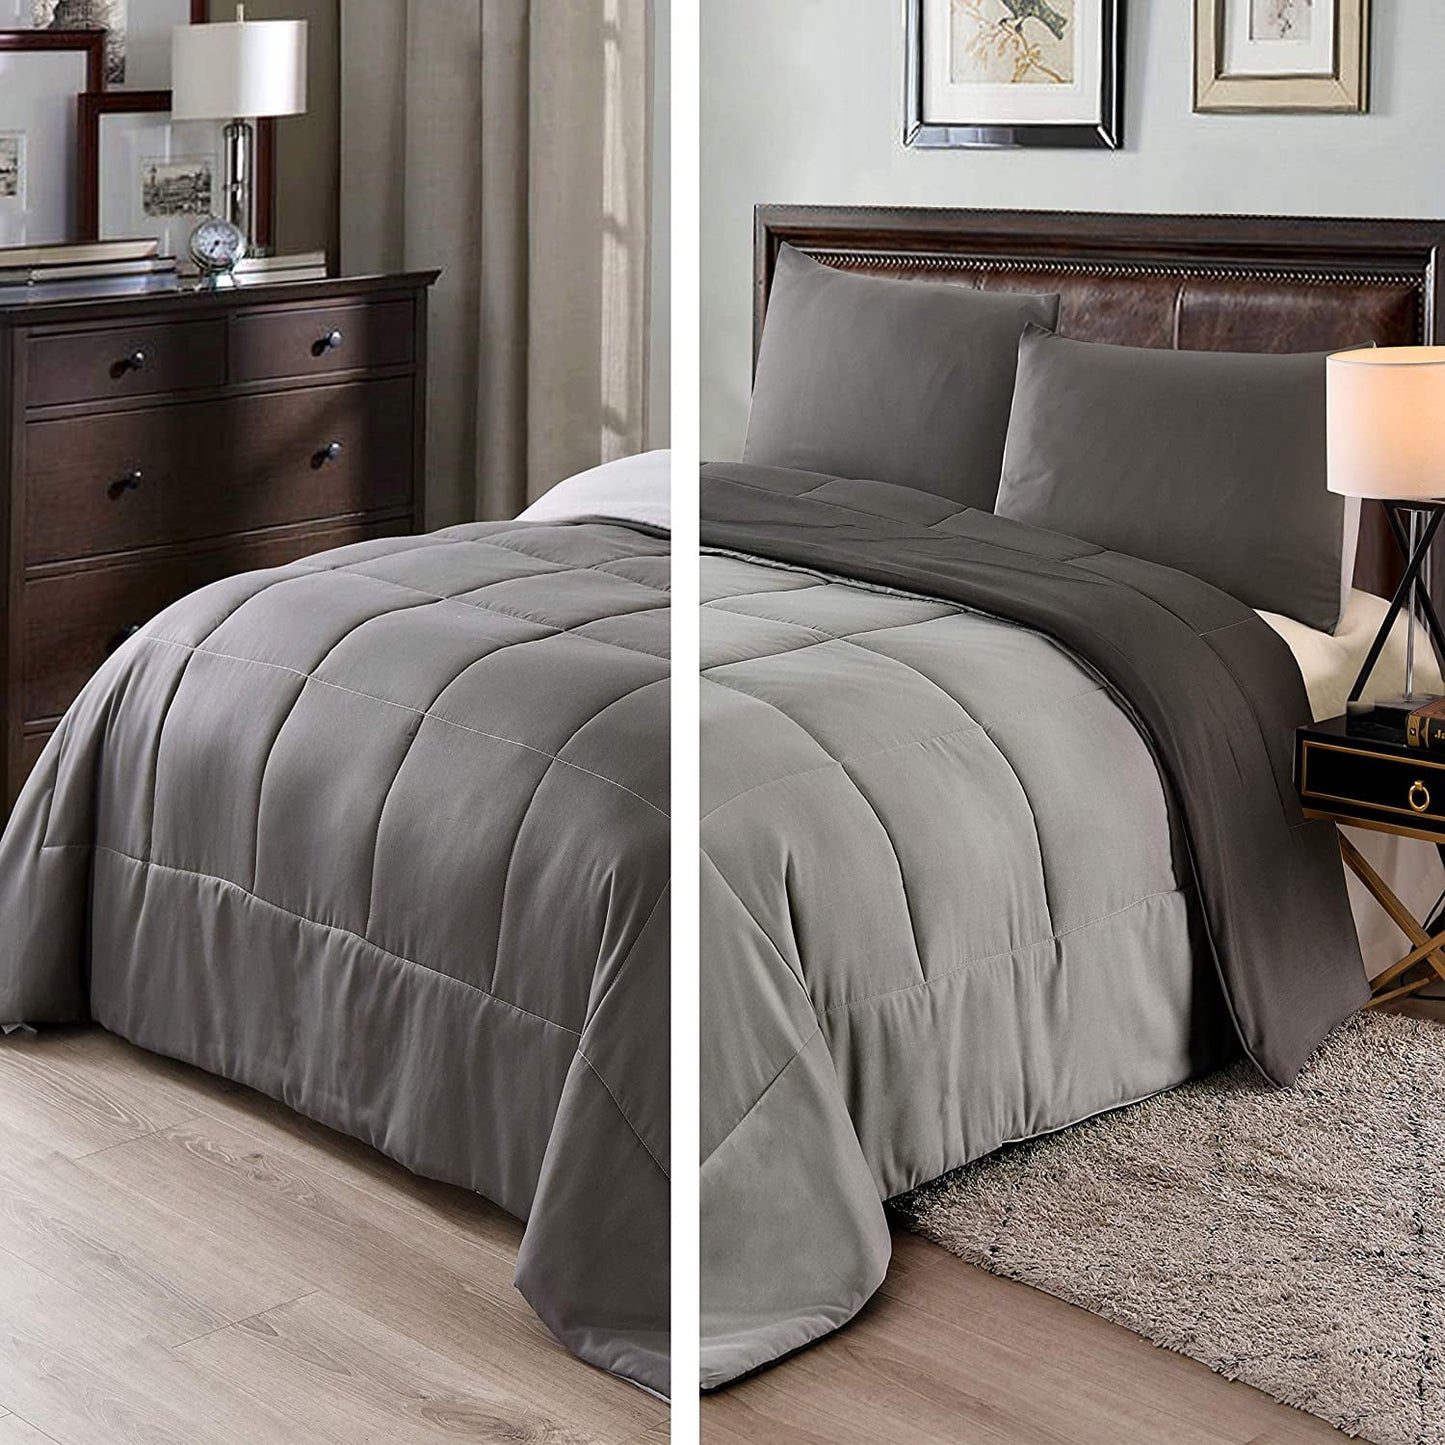 Exclusivo Mezcla Lightweight Reversible 2-Piece Comforter Set All Seasons, Down Alternative Comforter with 1 Pillow Sham, Twin Size, Grey